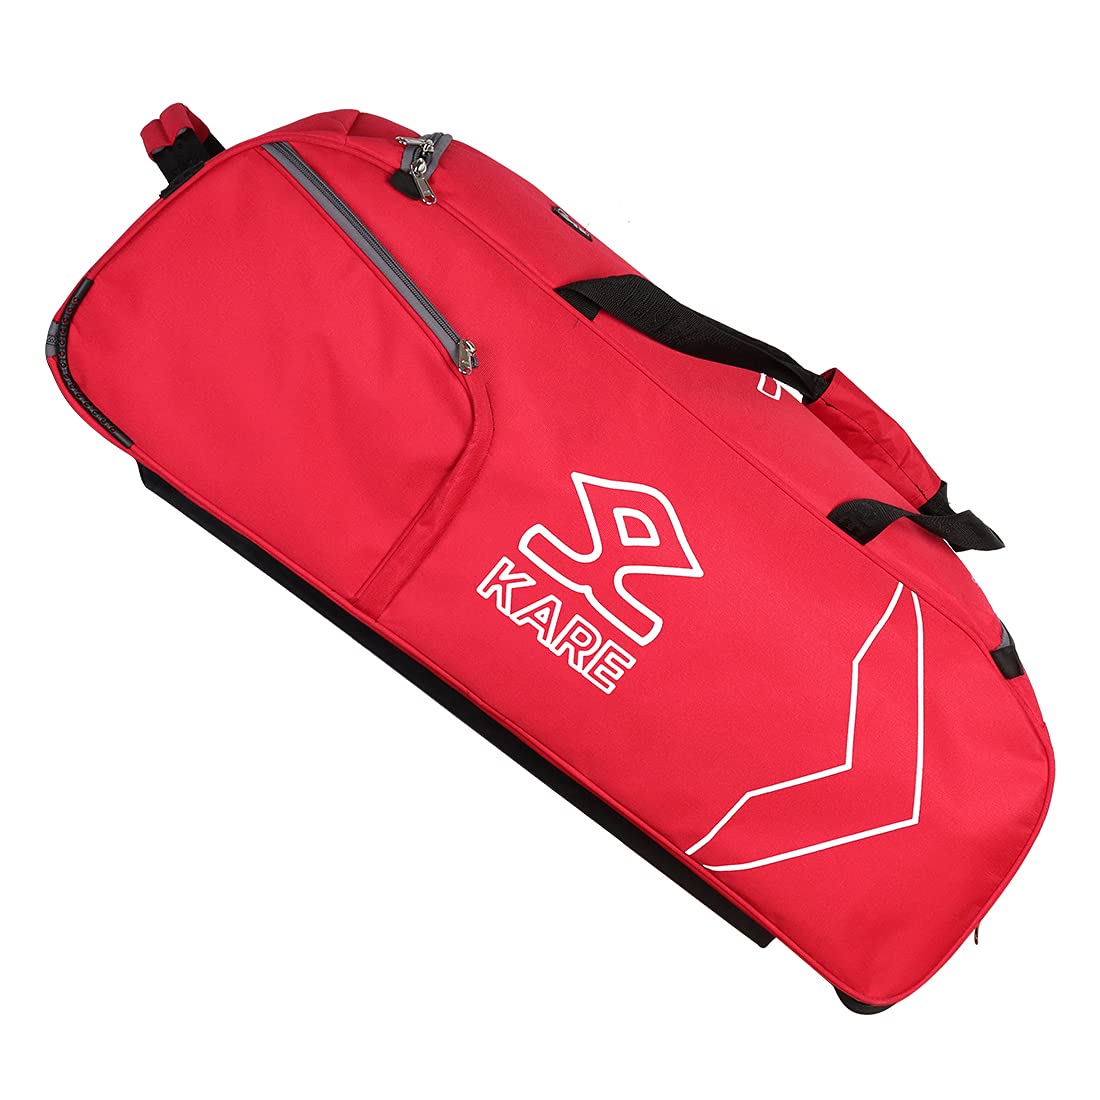 Shrey Kare Wheelie Bag Cricket Kitbag - Red - Best Price online Prokicksports.com